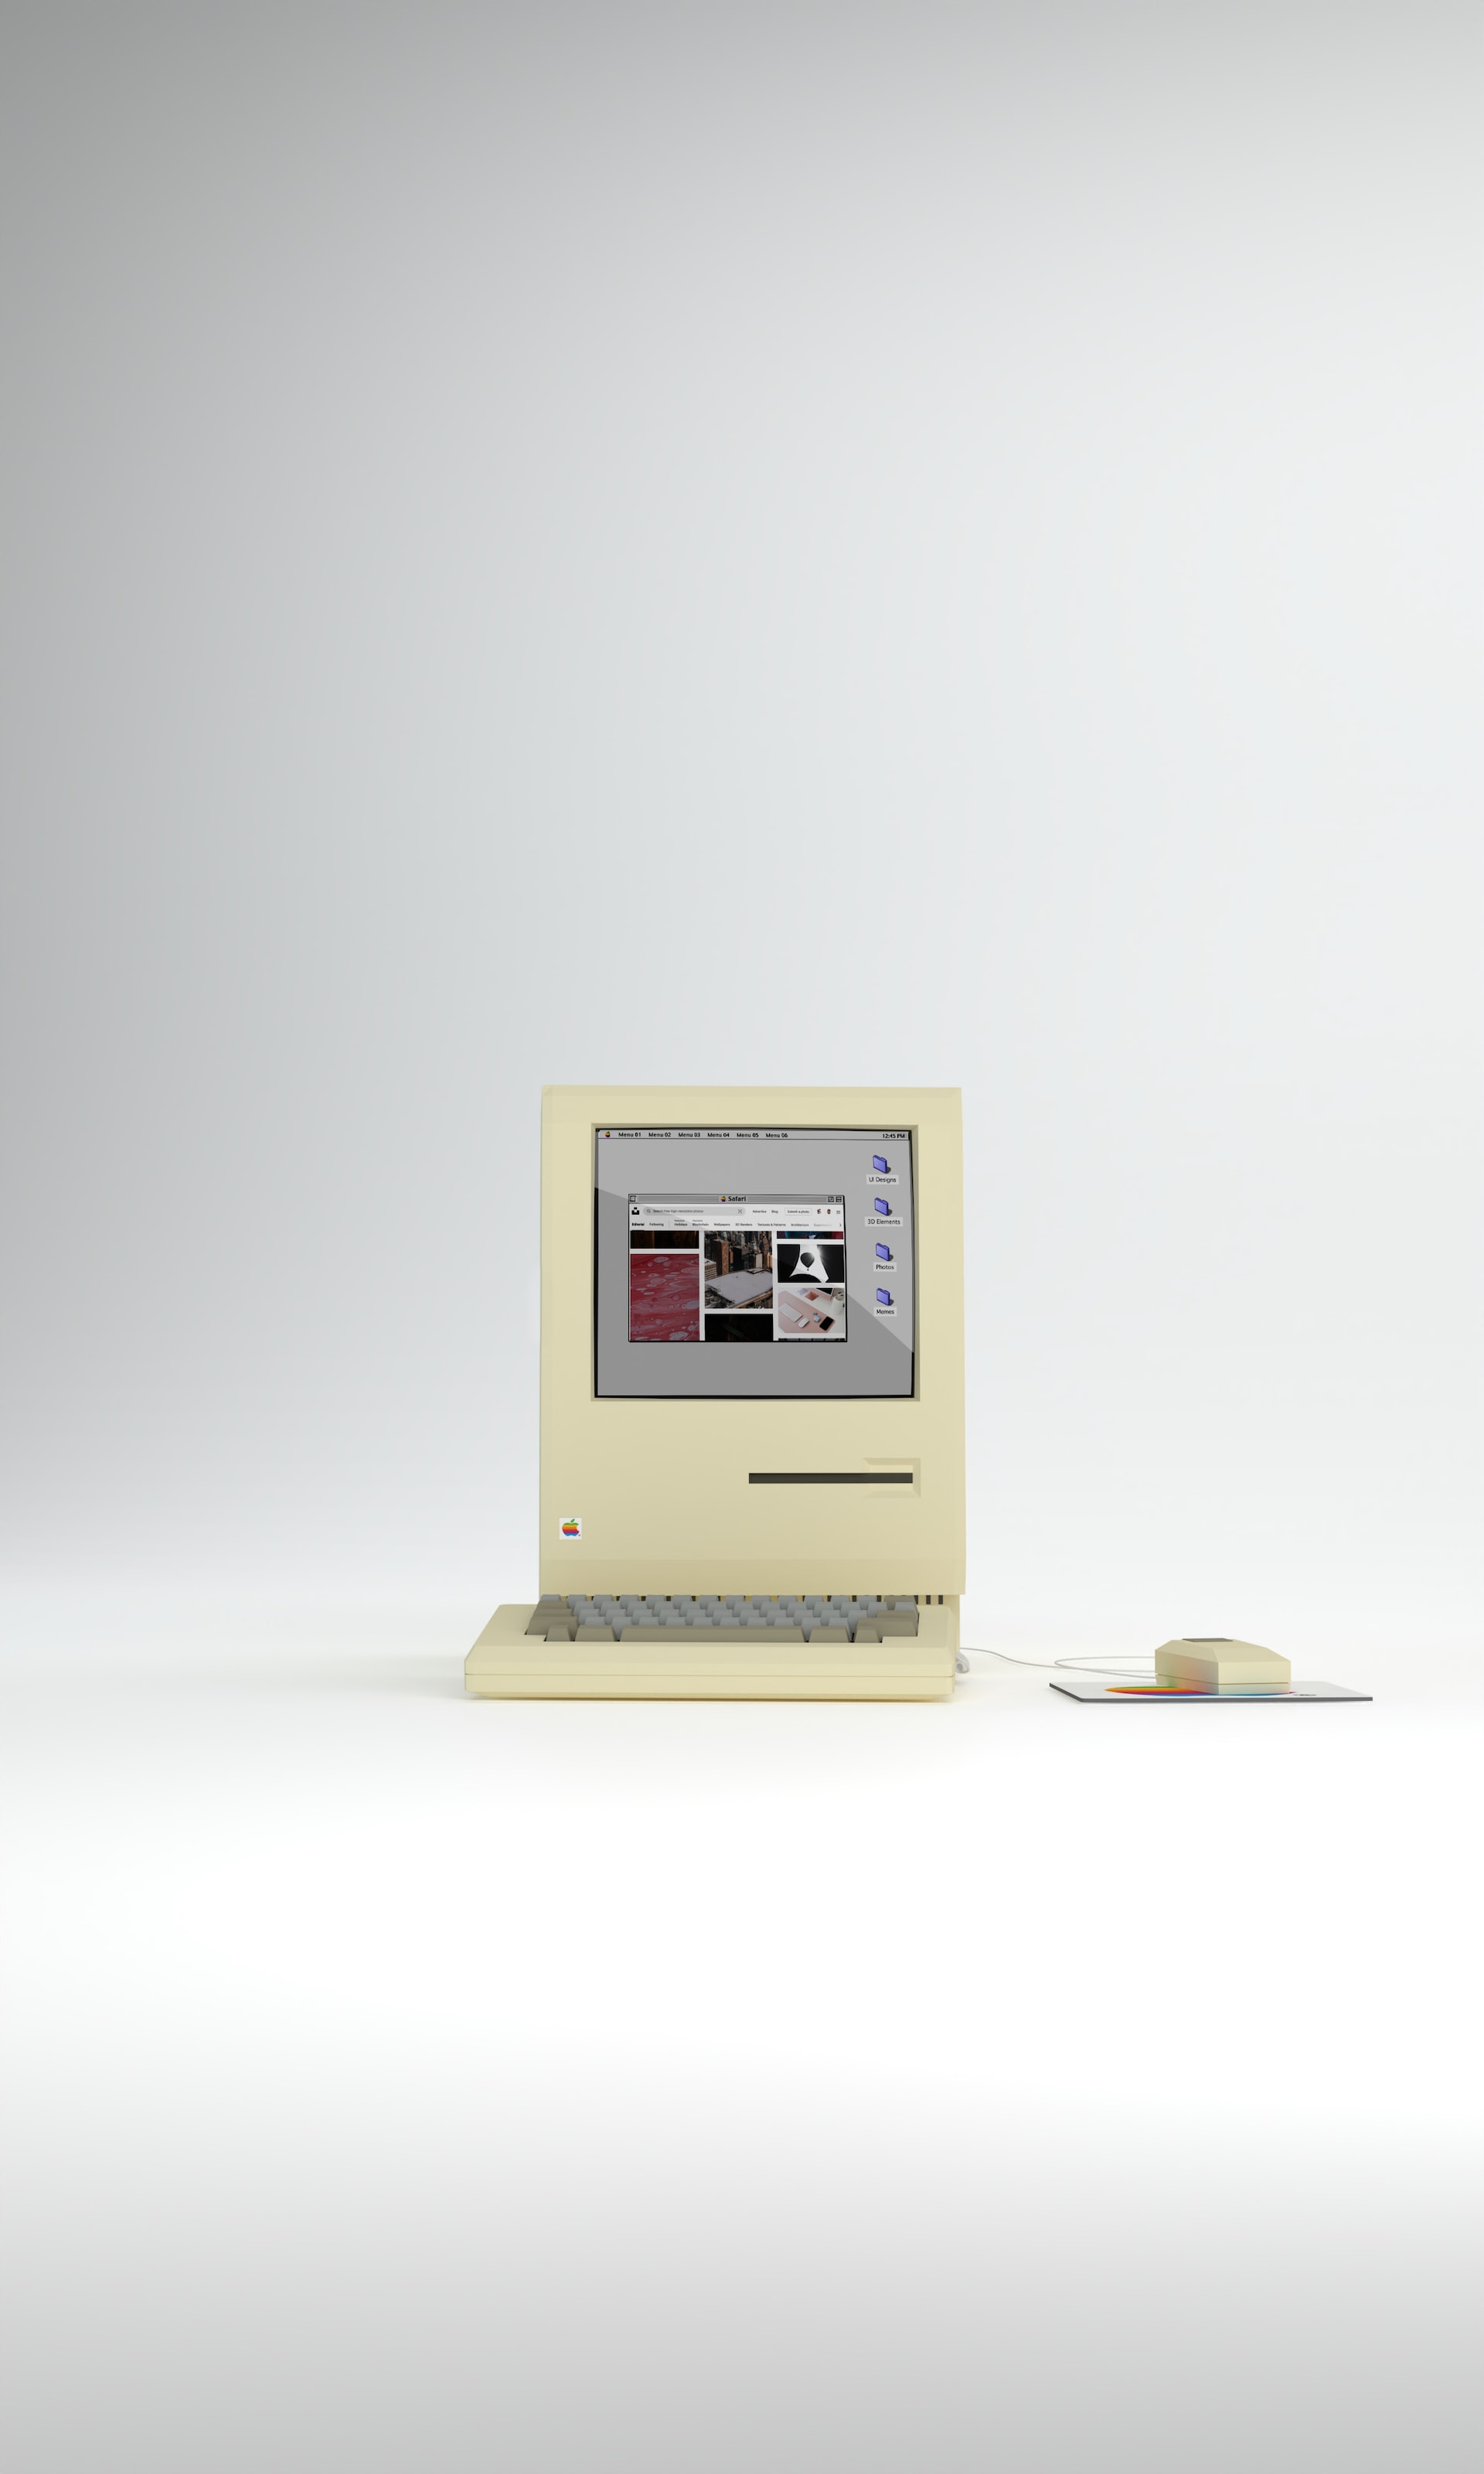 retro computer for retro internet